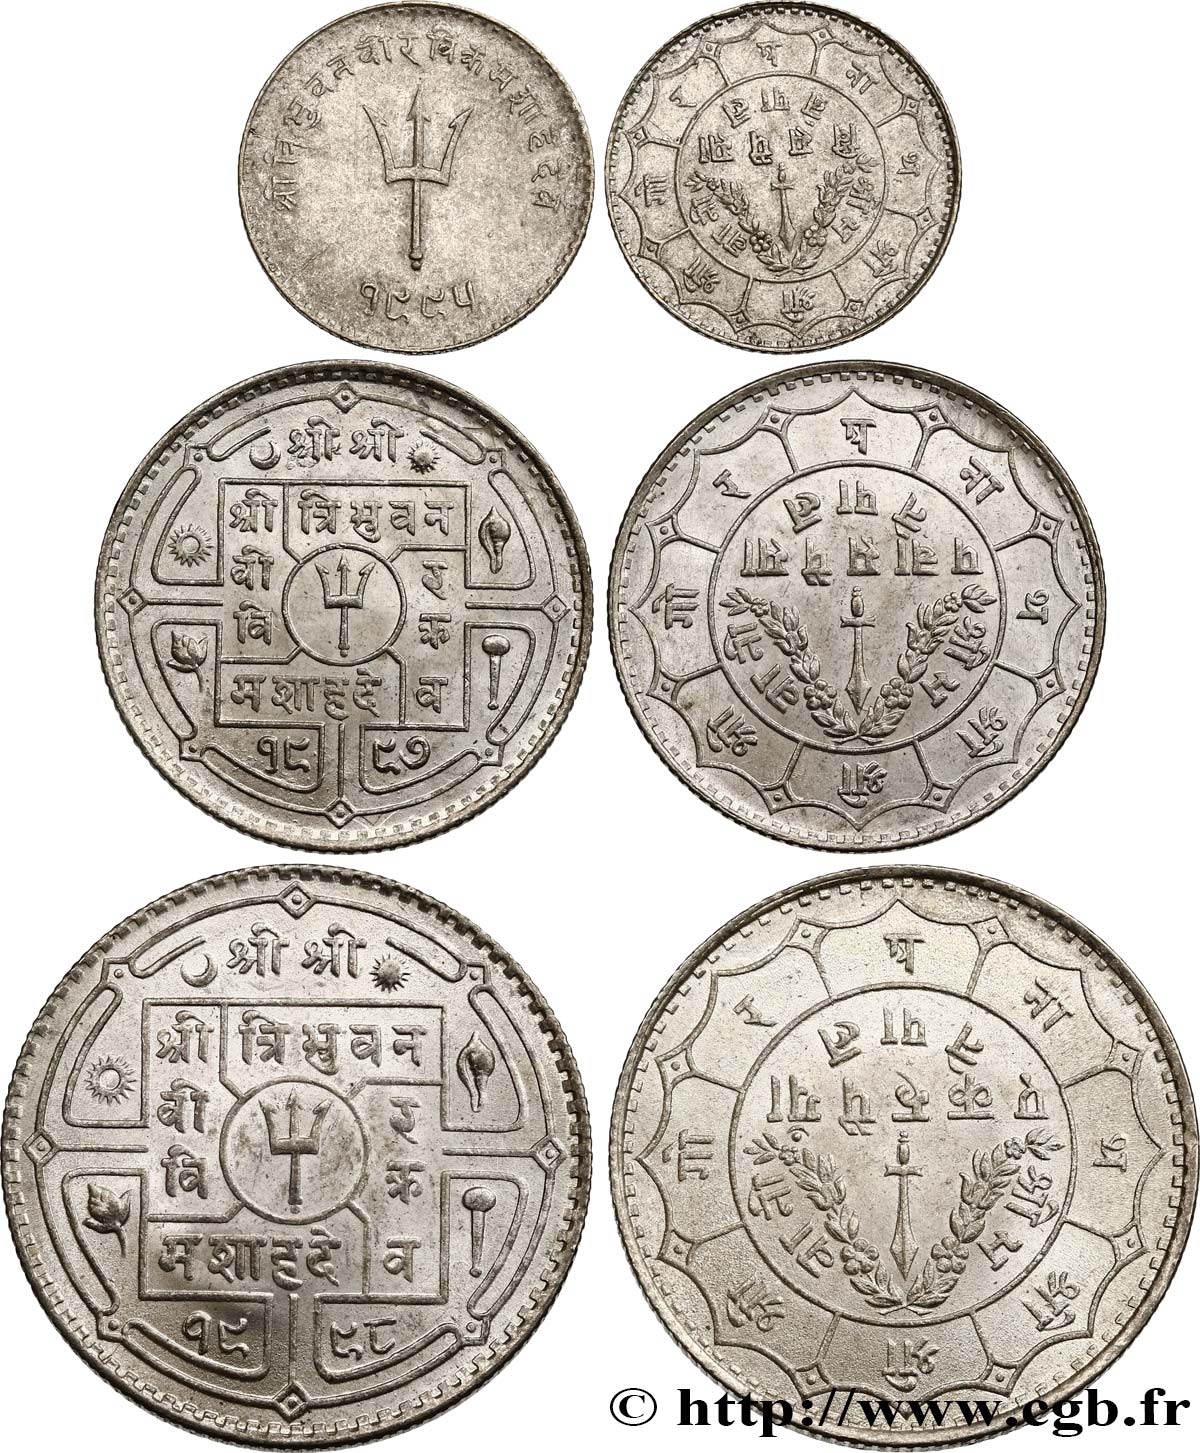 ROYAUME DU NÉPAL - TRIBHUVANA BIR BIKRAM Lot de 3 monnaies : Rupee, 50 Paisa et 20 Paisa n.d.  SPL 